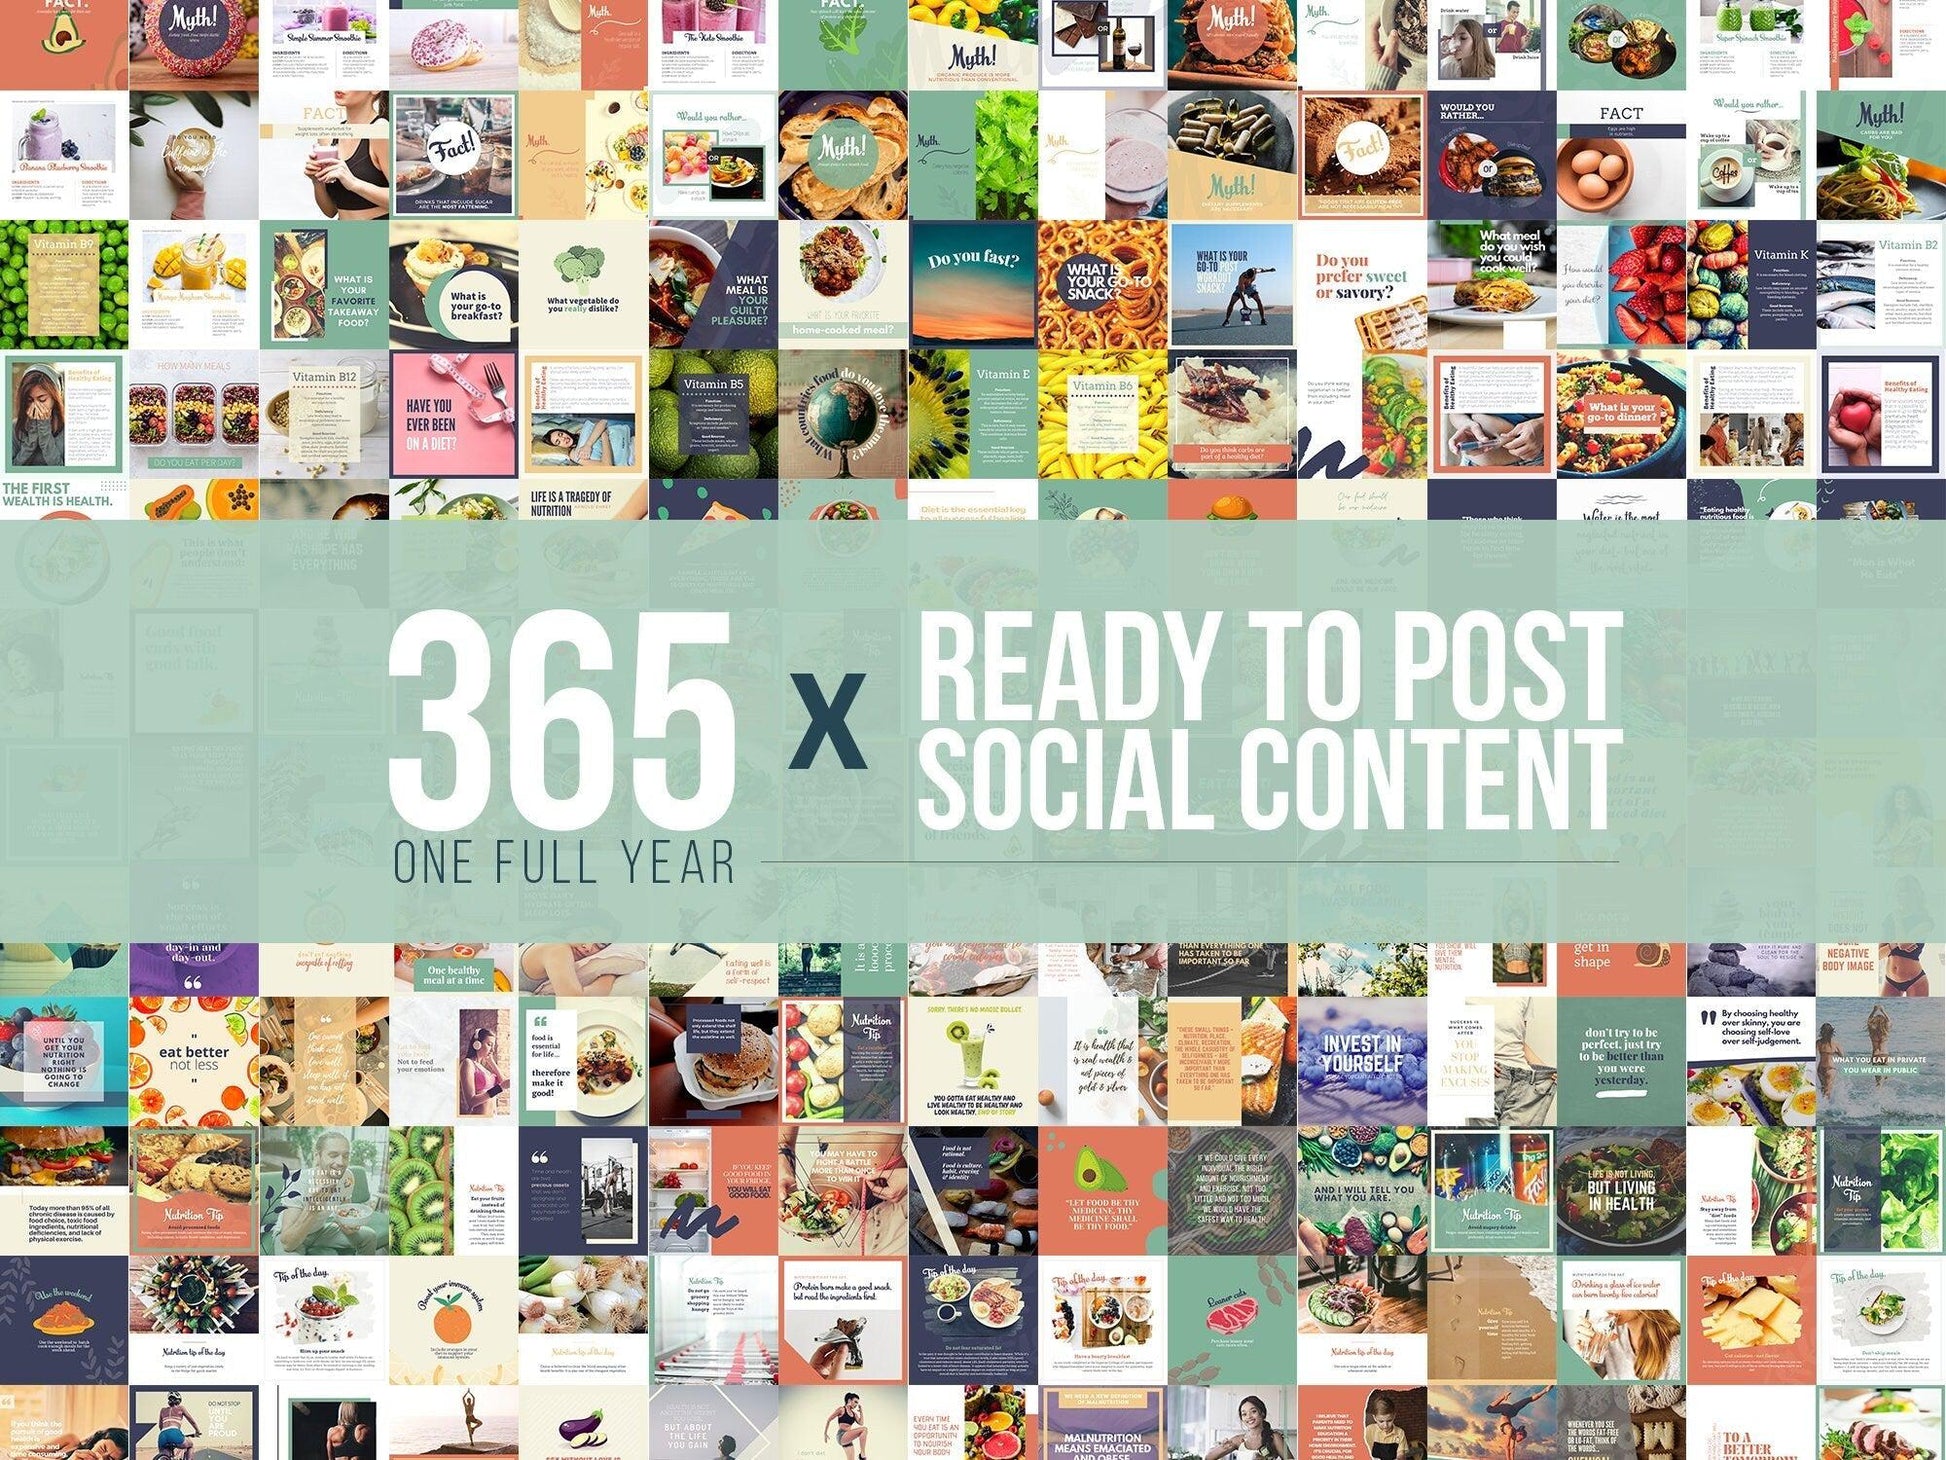 365 Nutrition Instagram Template Bundle For Social Media (multi)